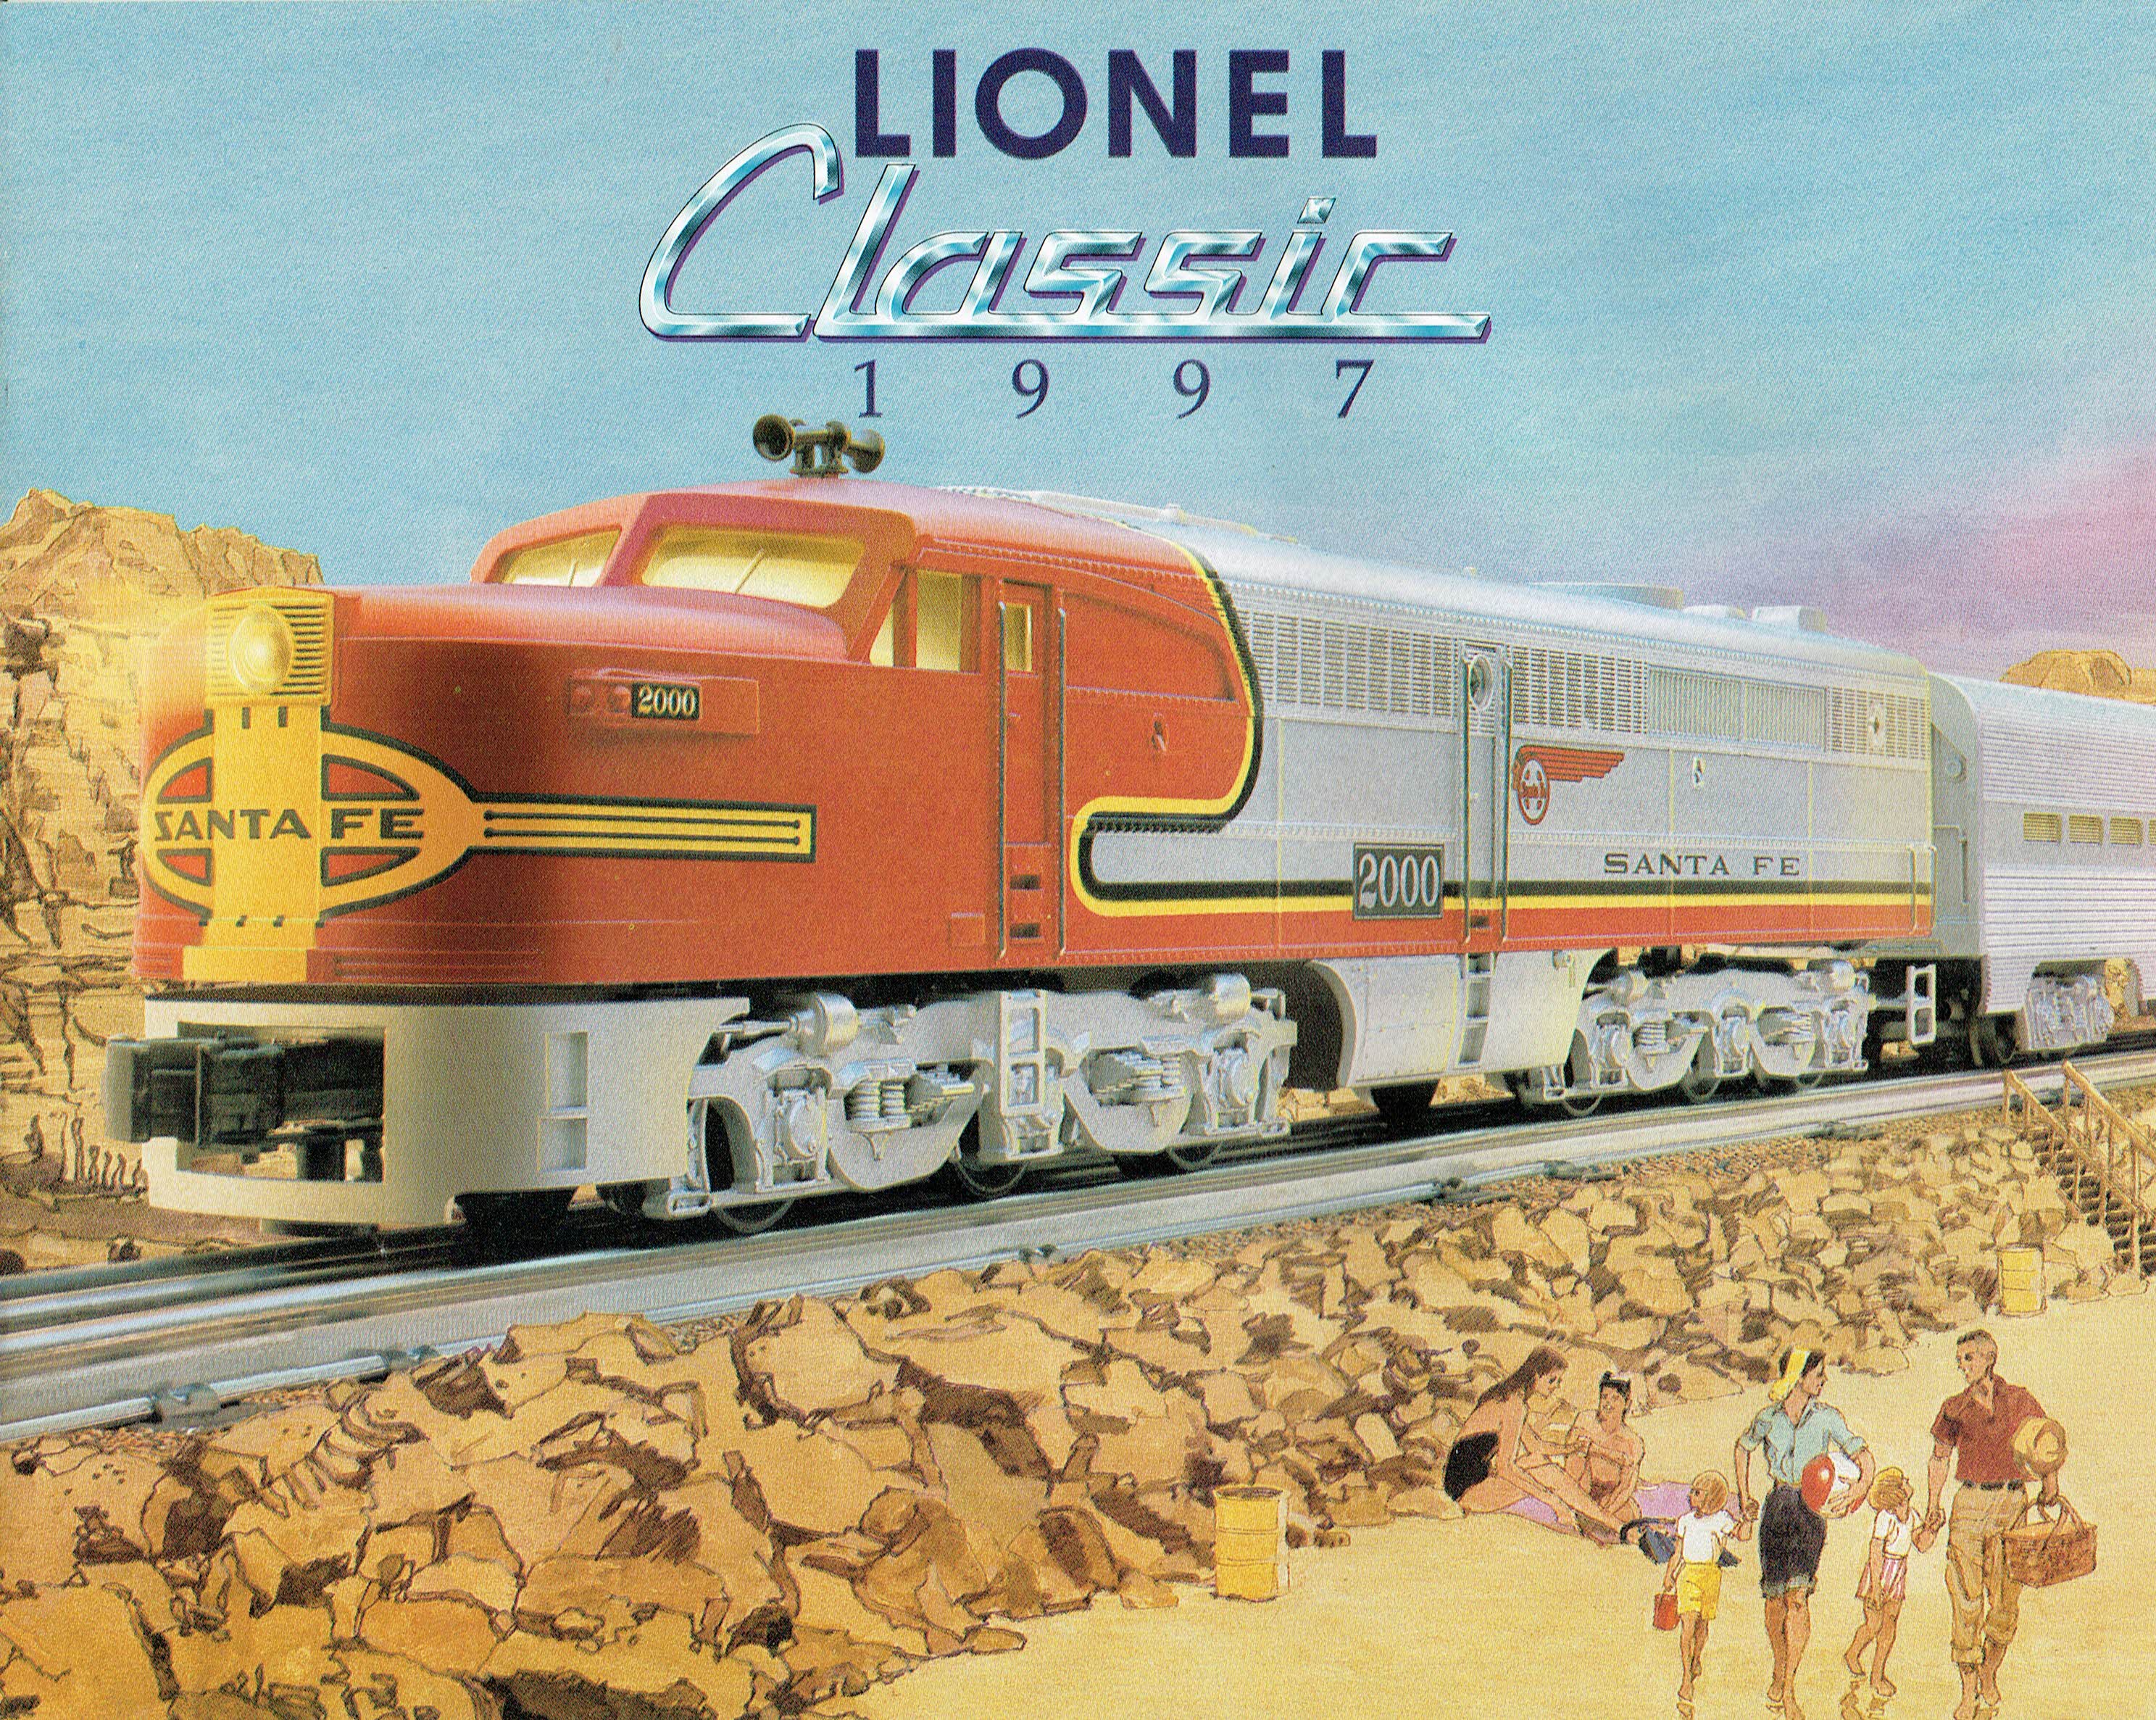 Lionel 1997 Classic (Santa Fe on cover) Catalog image